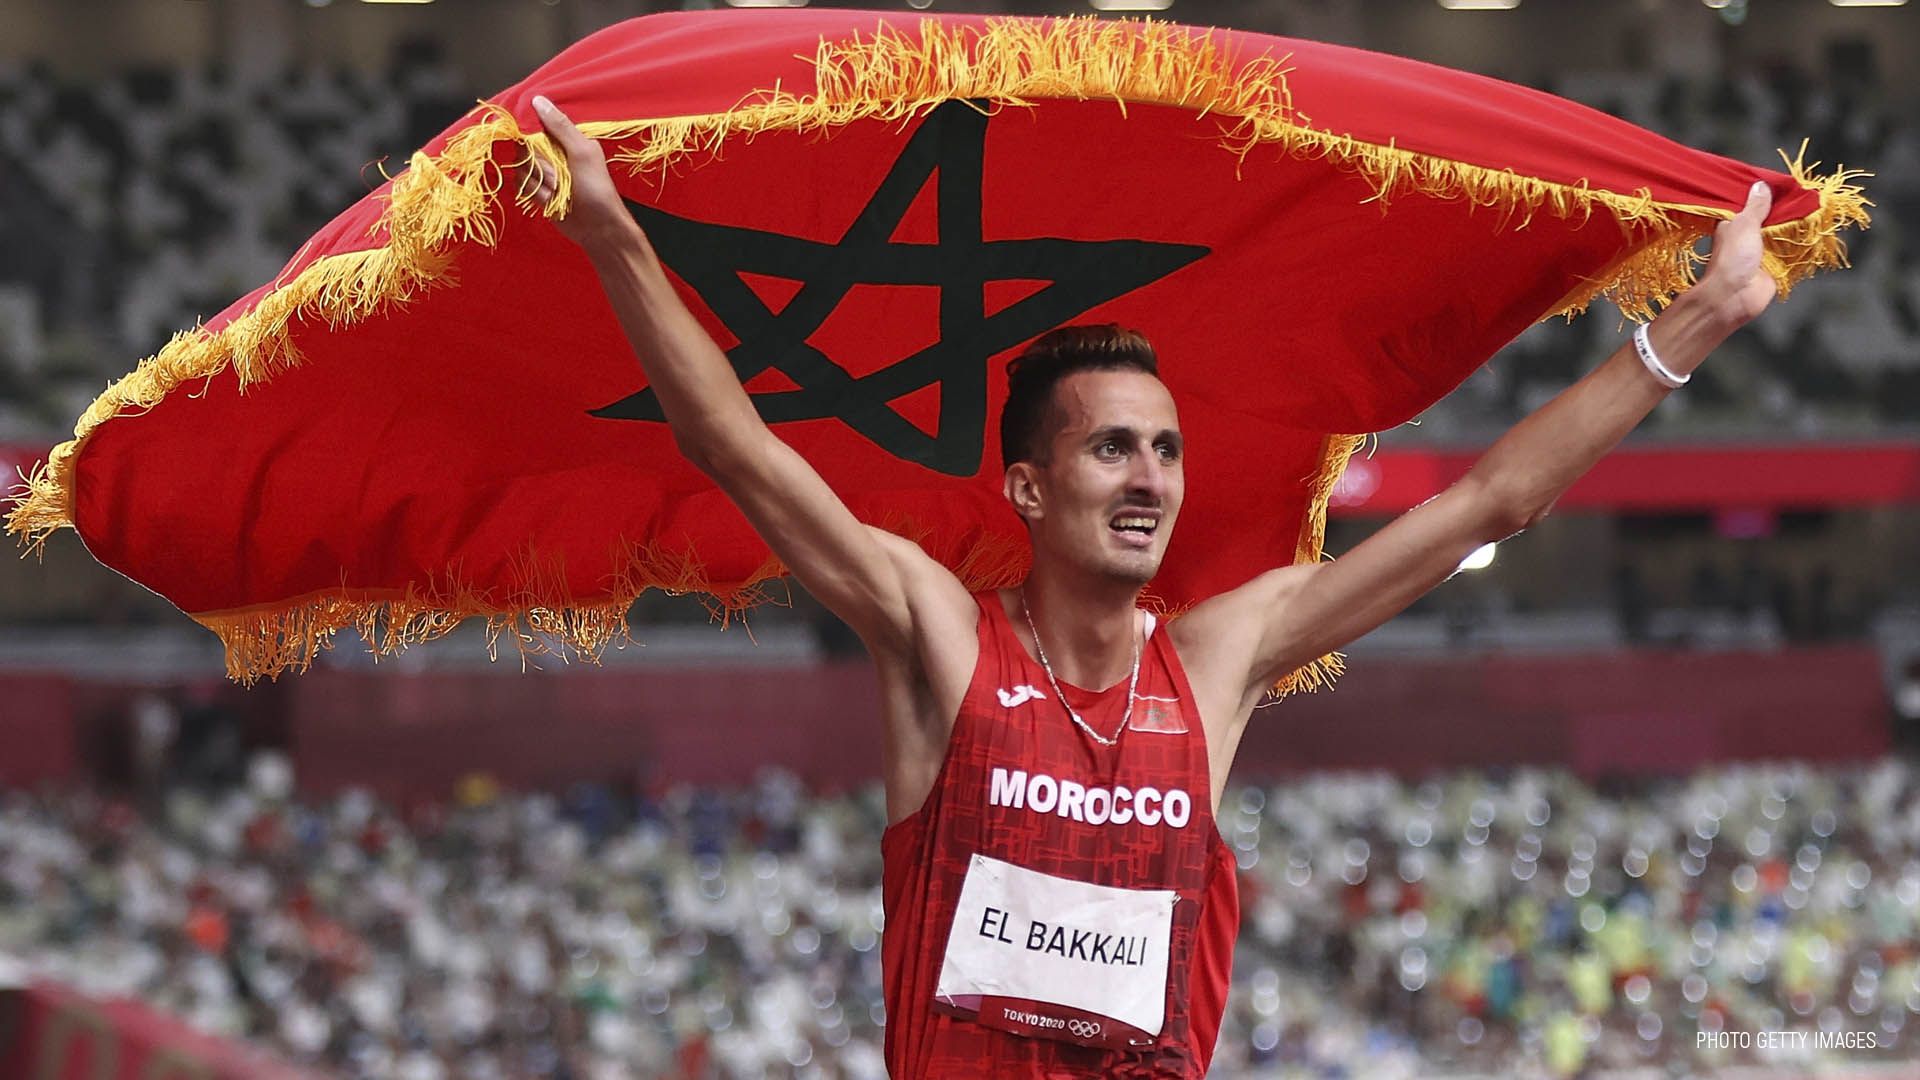 Morocco’s Champion Soufiane El Bakkali Wins 2,000 M Steeplechase in Zagreb